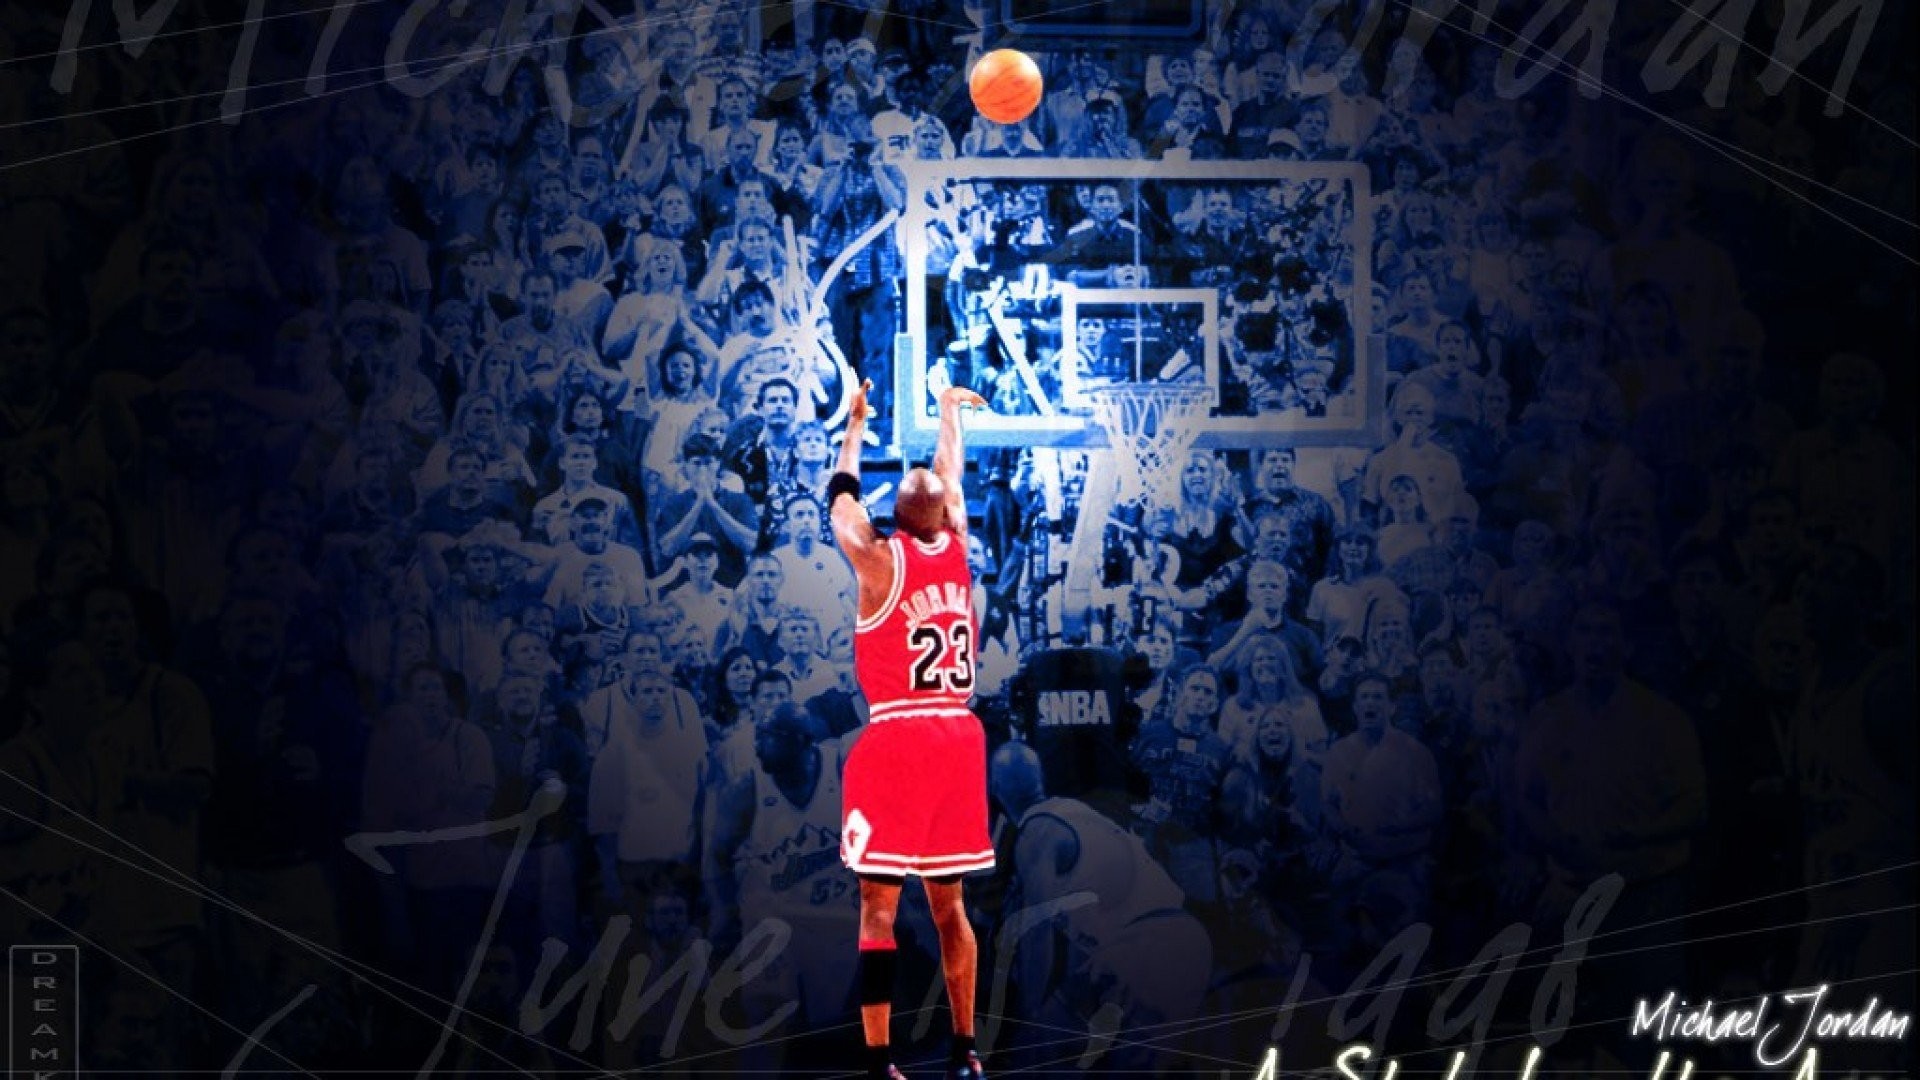 Nba Logo Wallpaper Michael Jordan Galaxy 462810 Hd Wallpaper Backgrounds Download